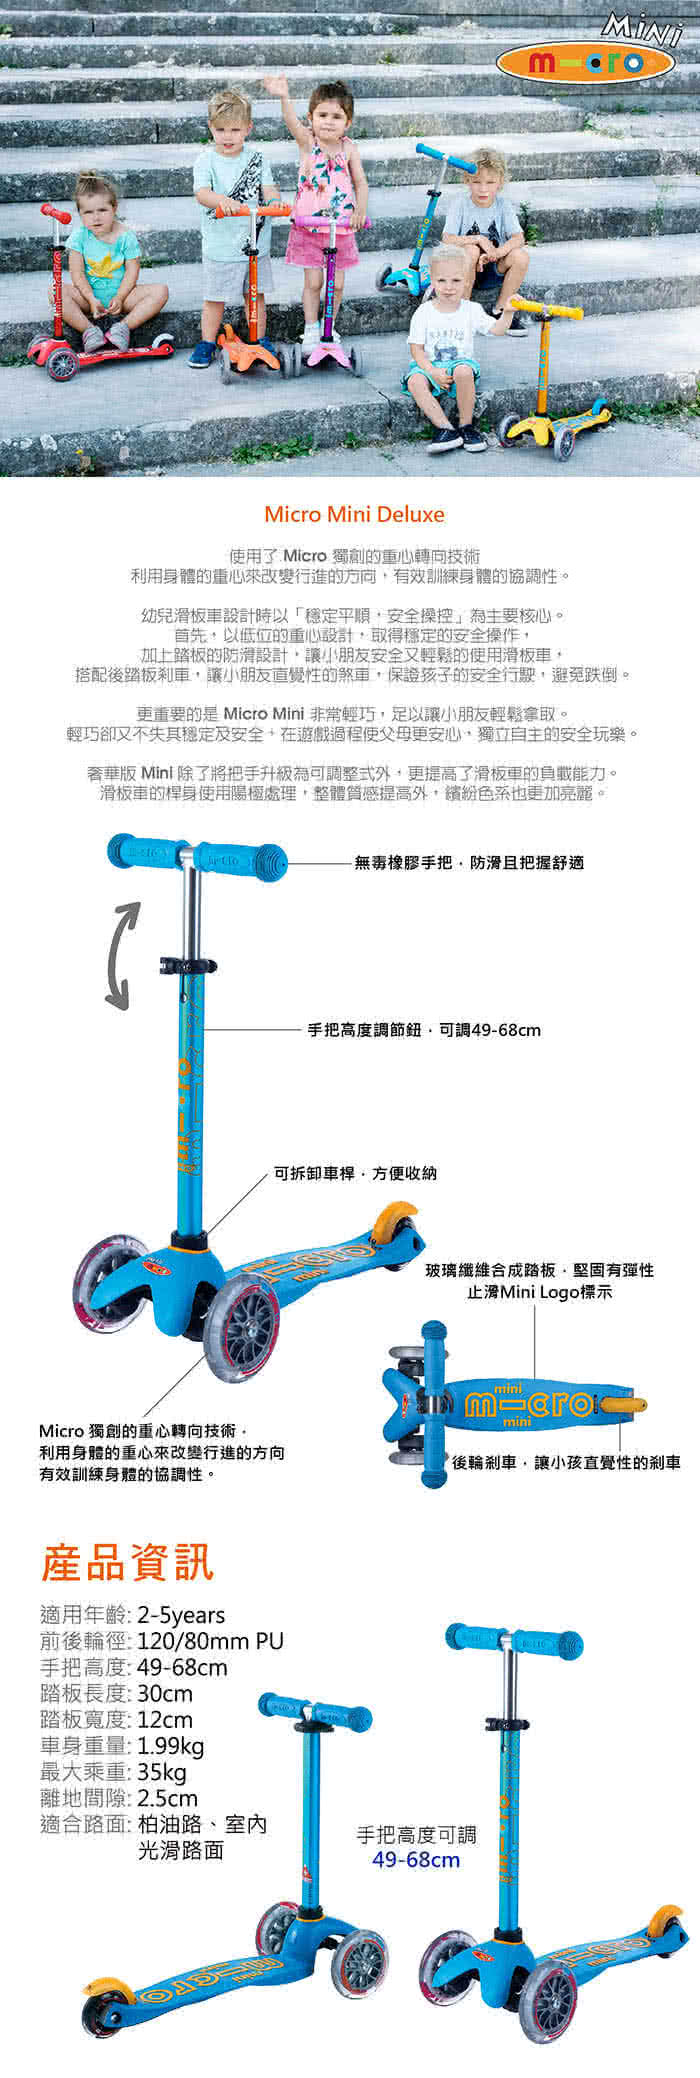 Micro 滑板車 Mini Deluxe 兒童滑板車 奢華版 可調整式把手 Momo購物網